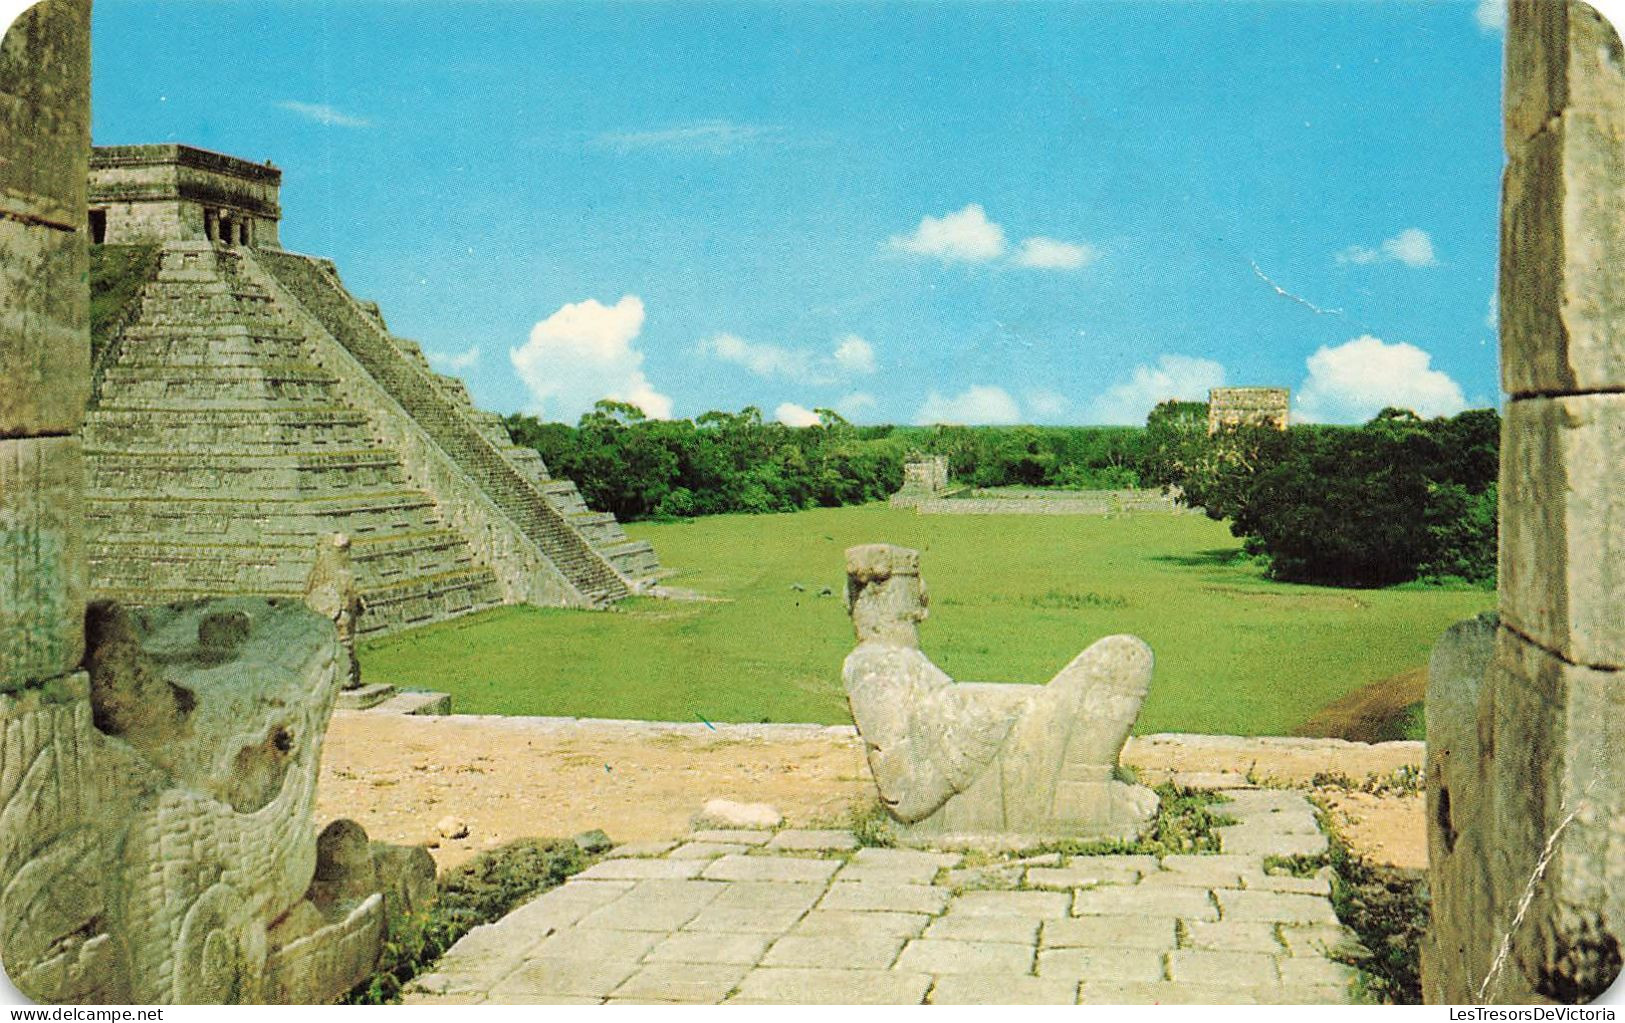 MEXIQUE - Chichen Itza - Yucatan - Mexico - Chac Mool Figure At The Temple Of The Warriors - The Castle - Carte Postale - Mexico